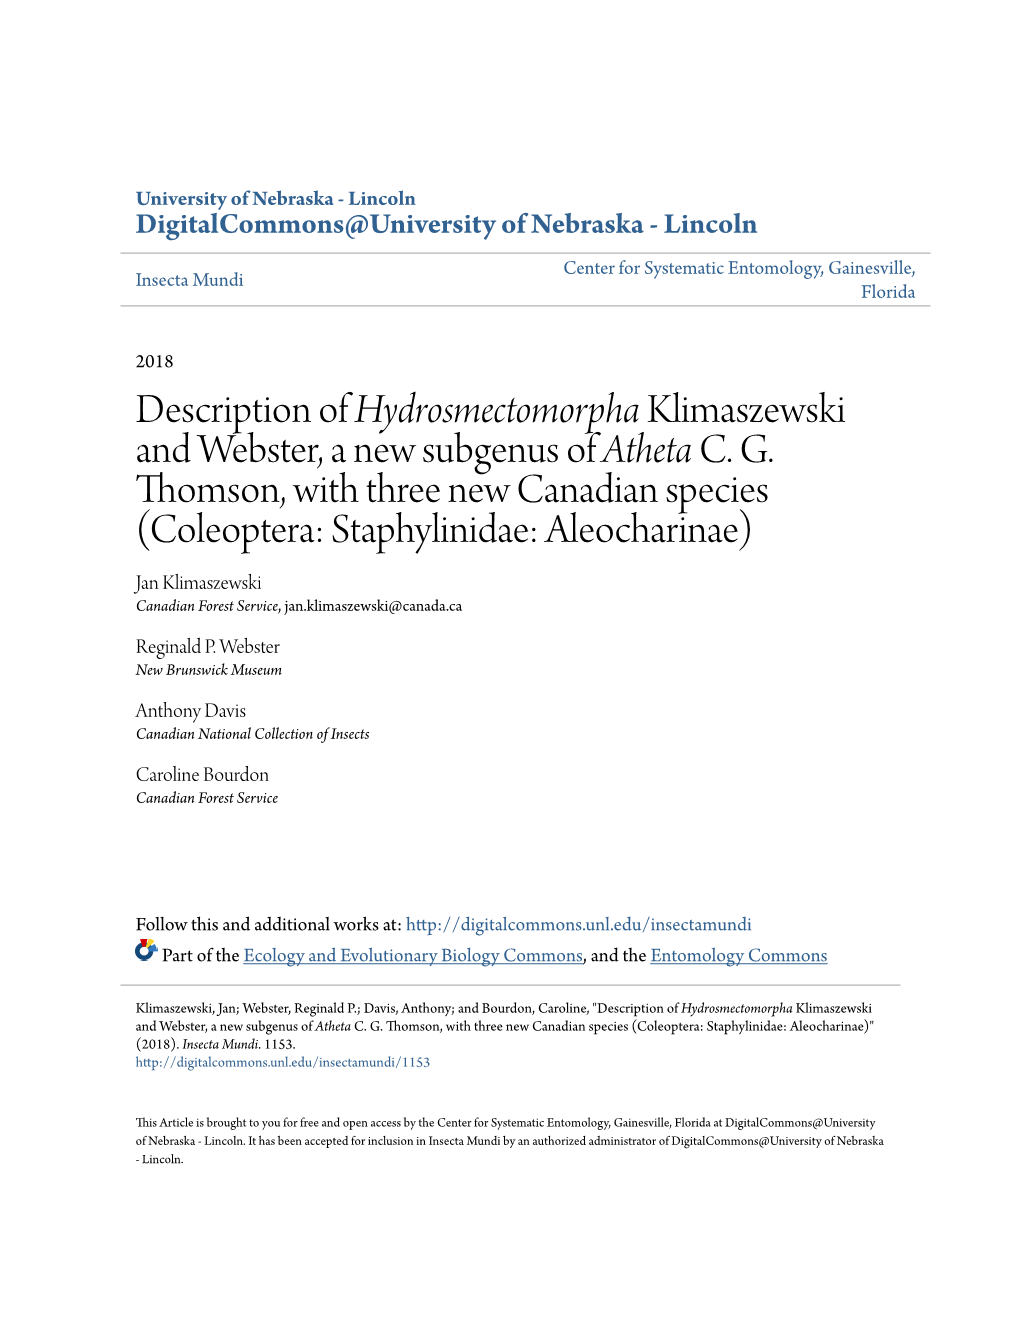 Description of Hydrosmectomorpha Klimaszewski and Webster, a New Subgenus of Atheta C